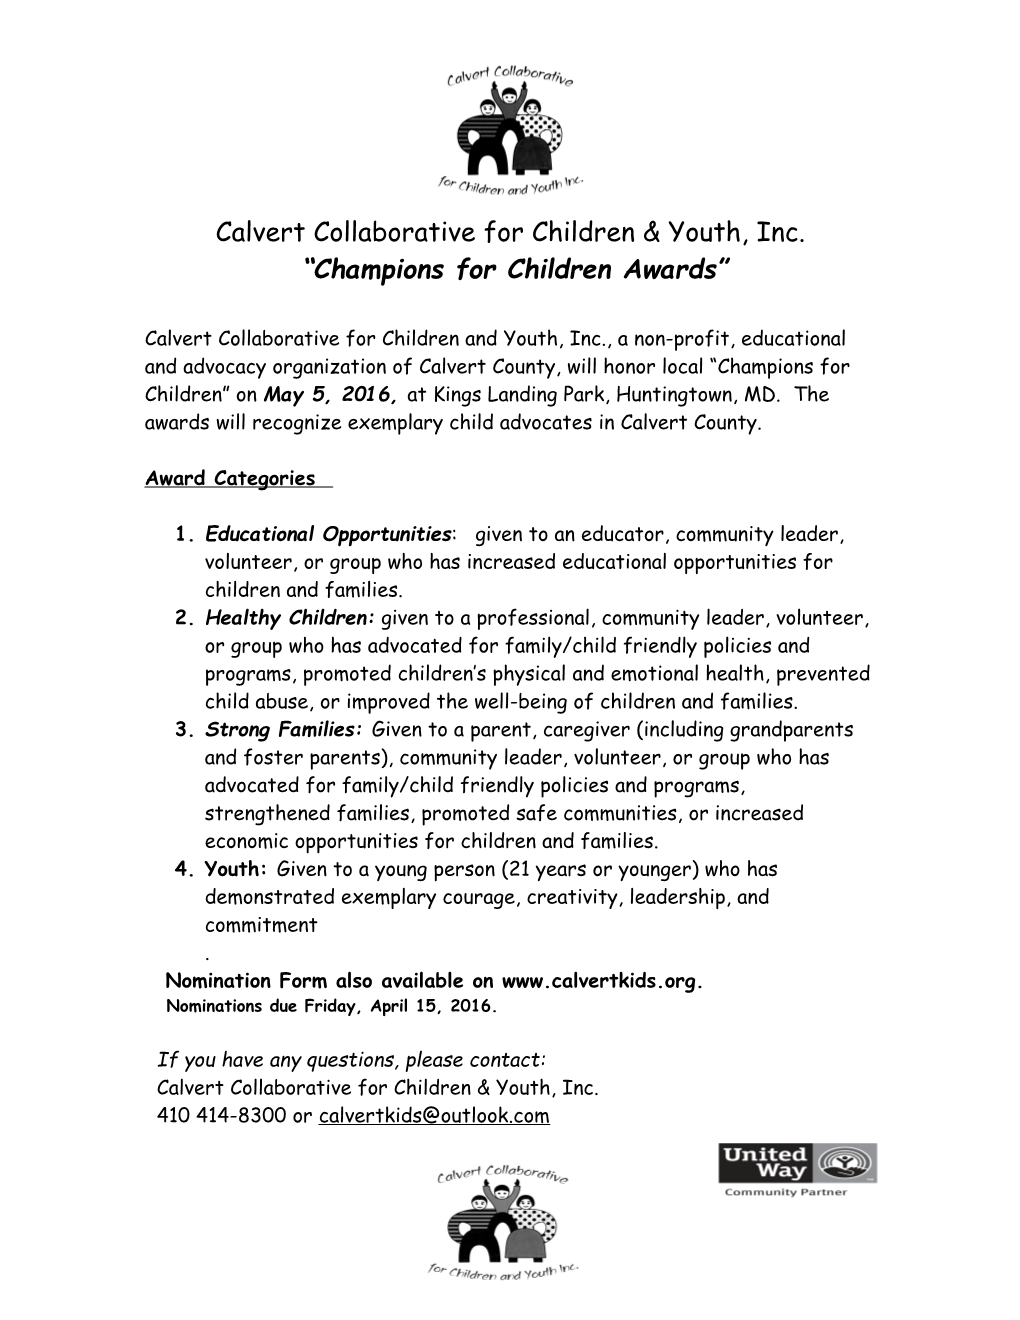 Calvert Collaborative for Children & Youth, Inc